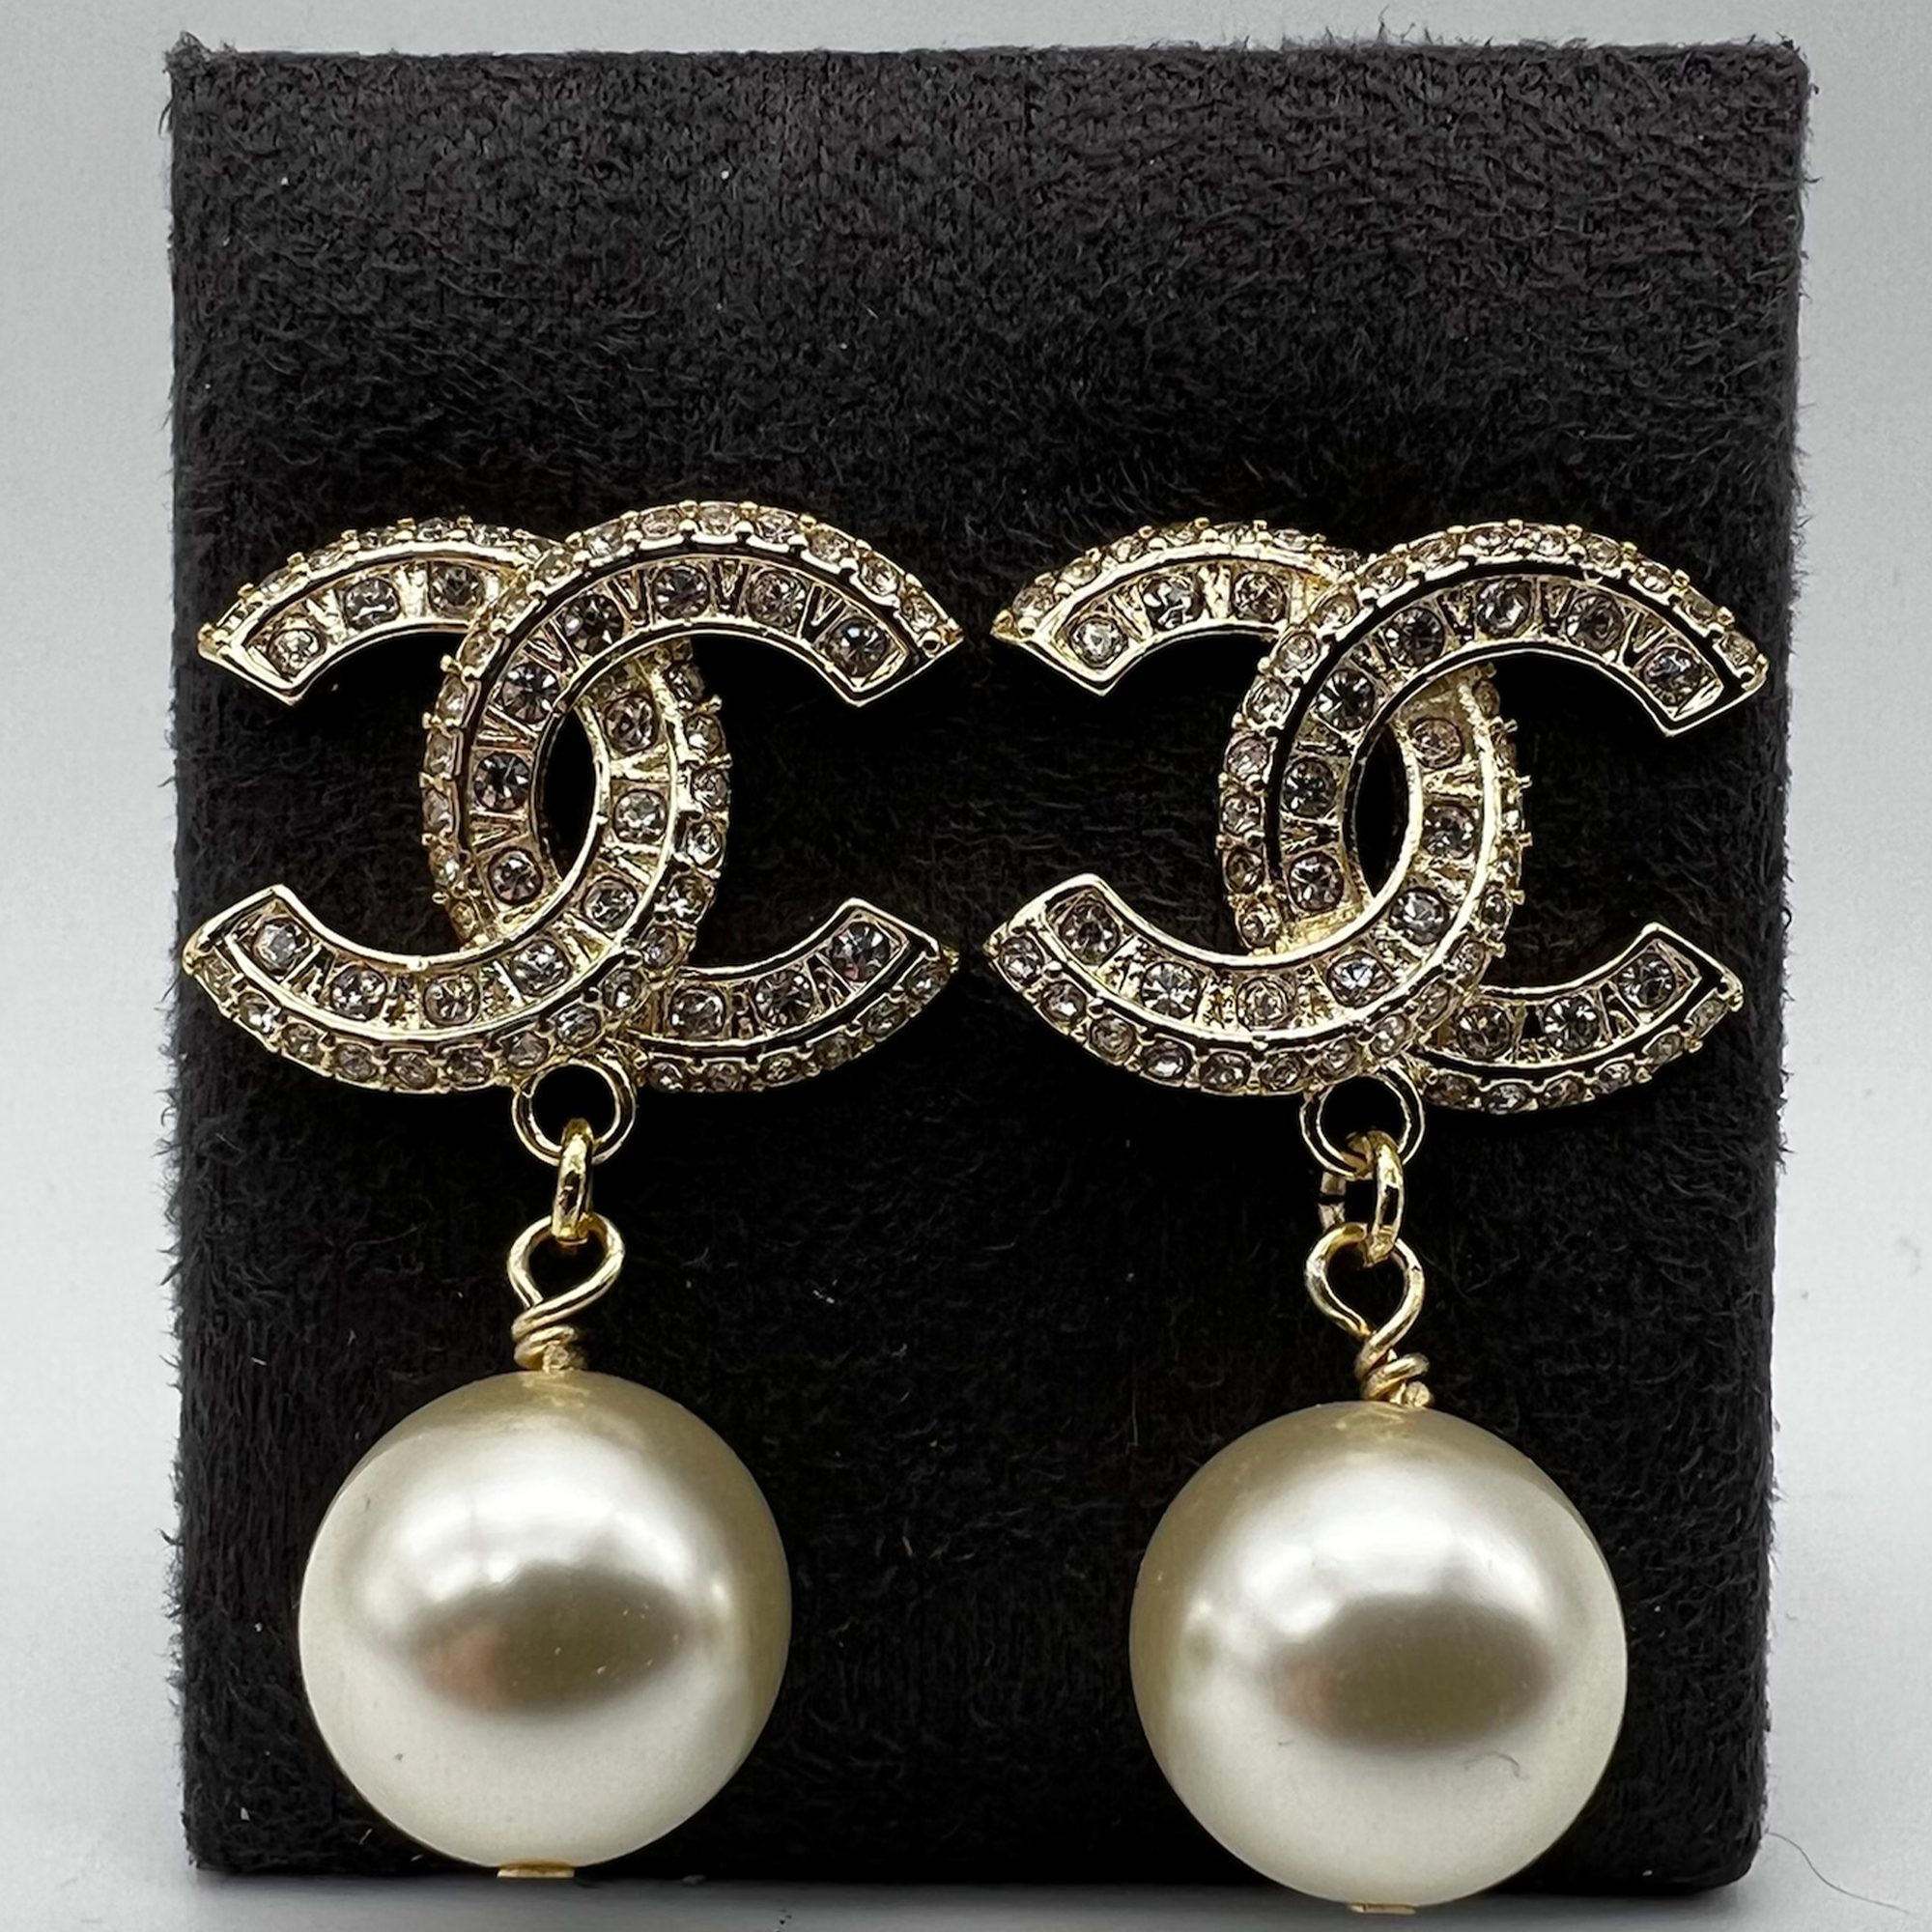 Chanel CC Crystal Stud Earrings